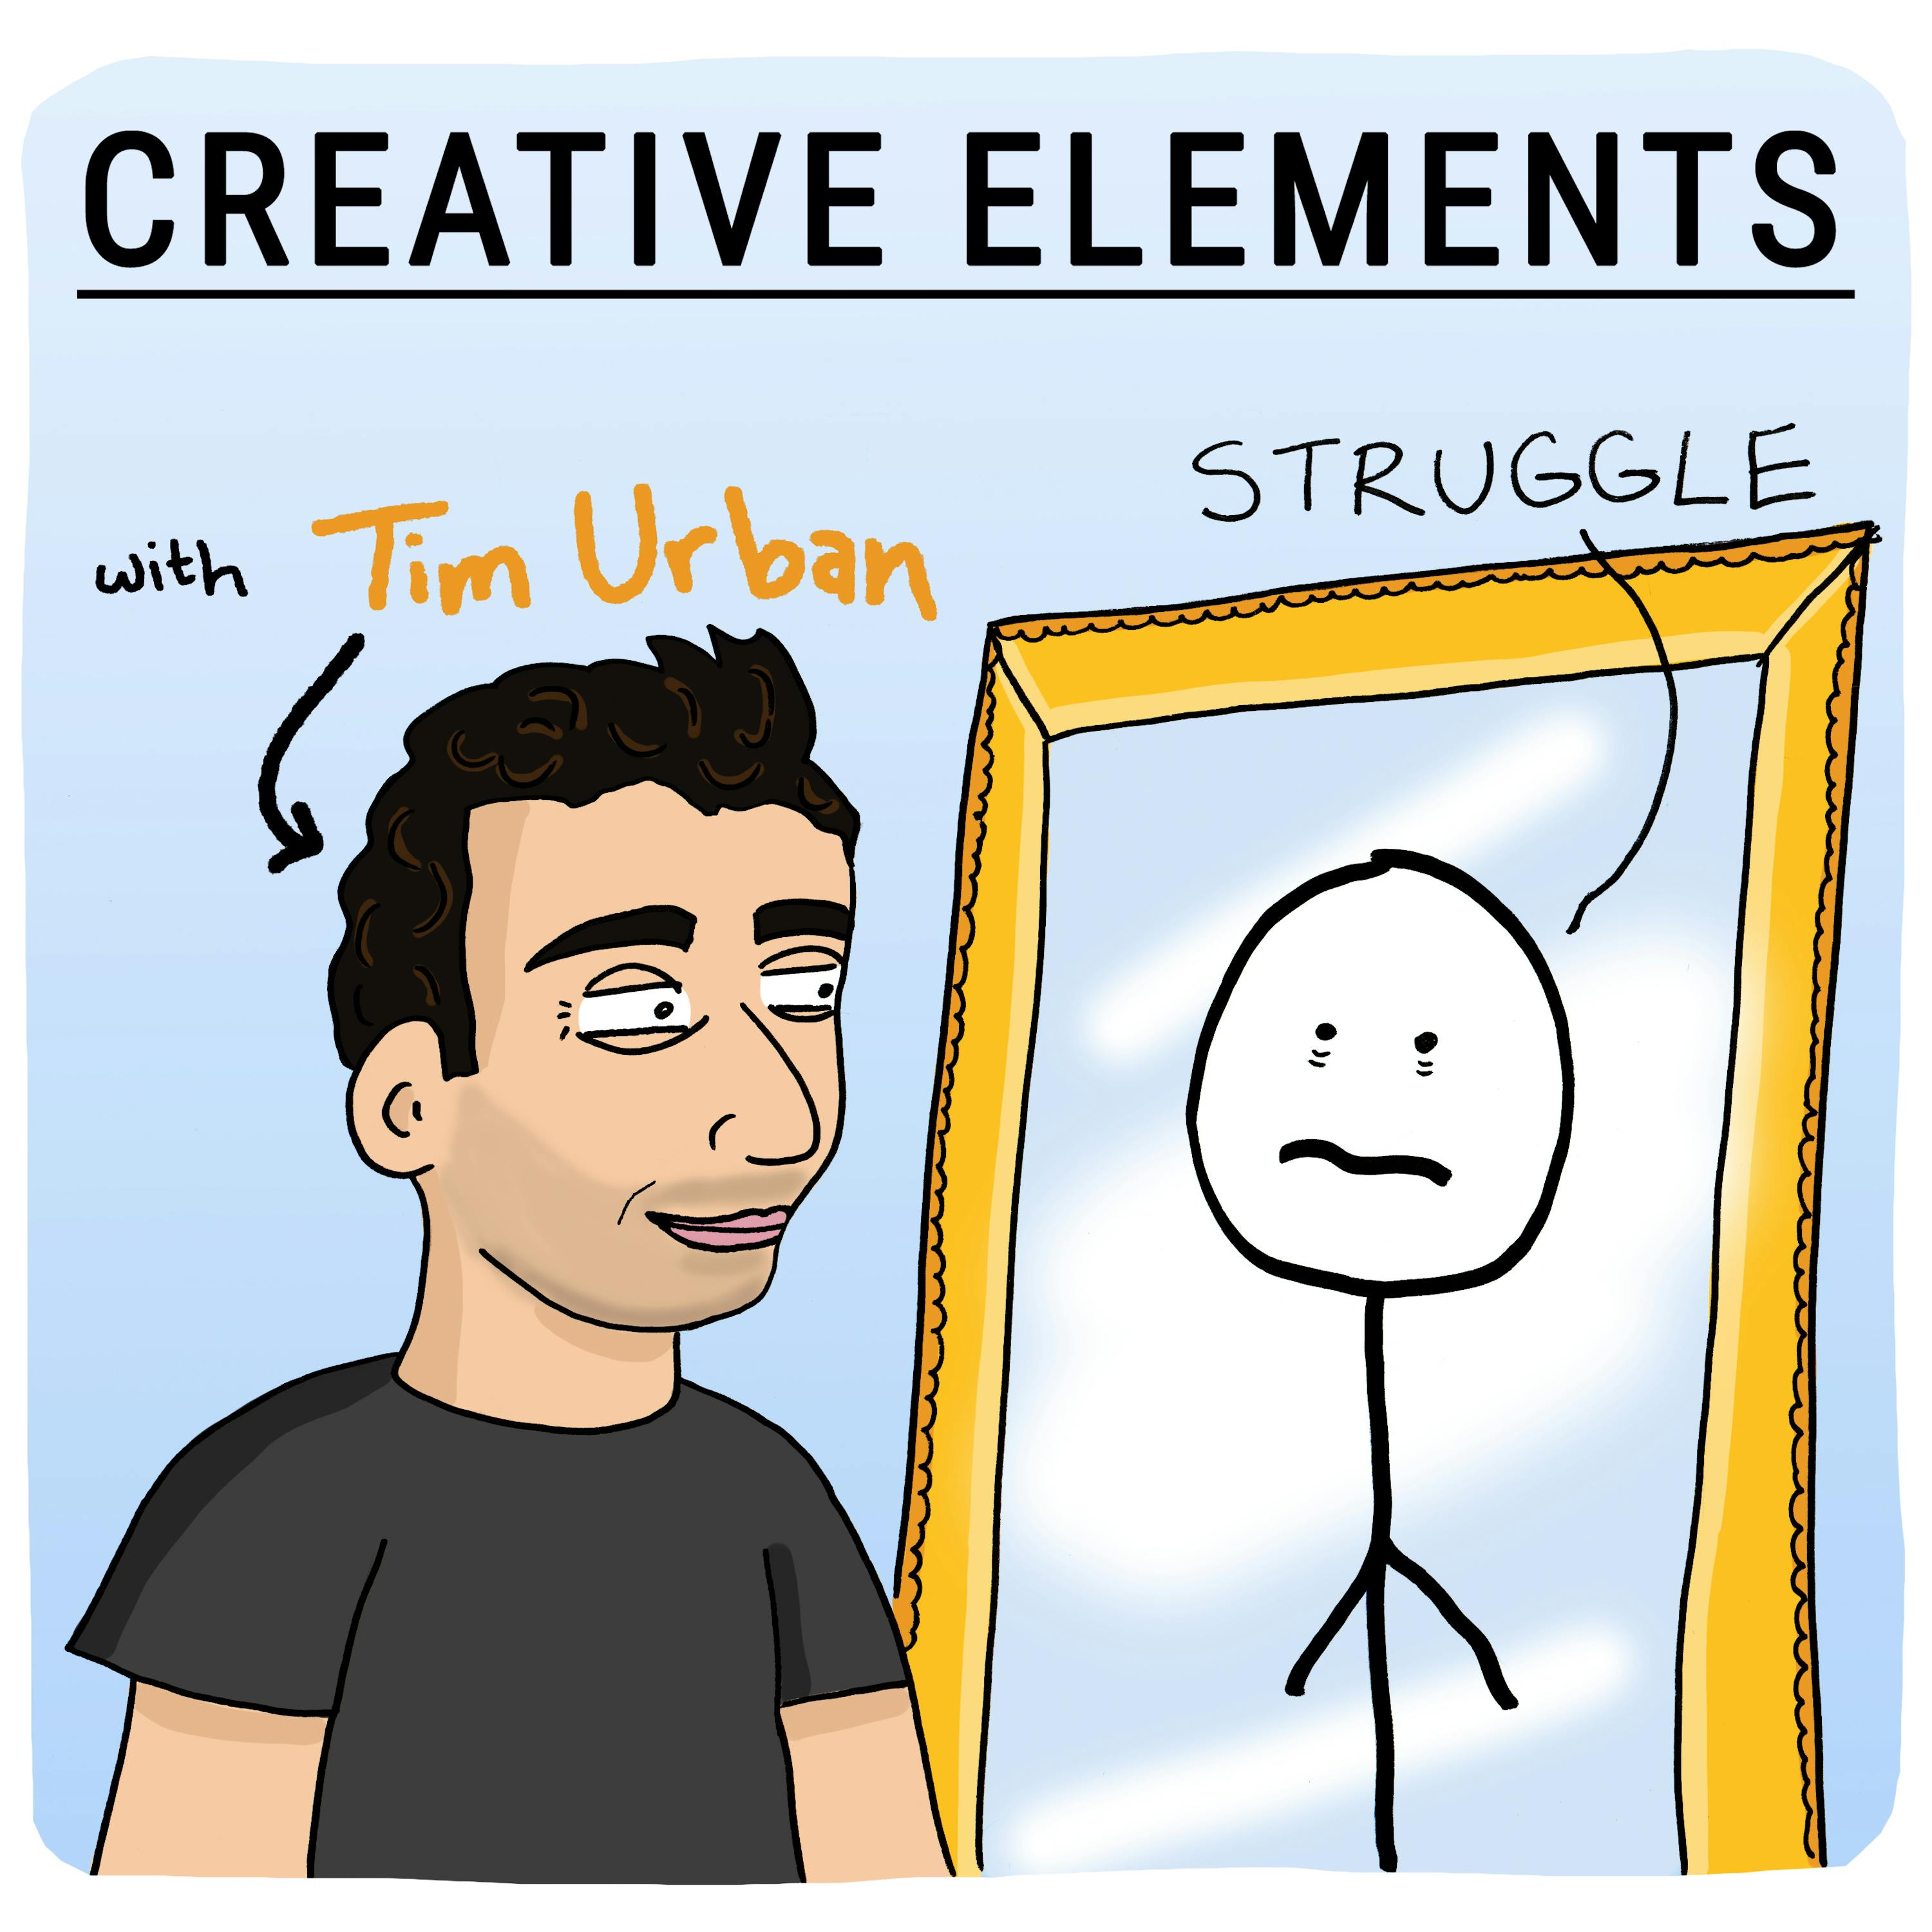 [REPLAY] #41: Tim Urban [Struggle] Image